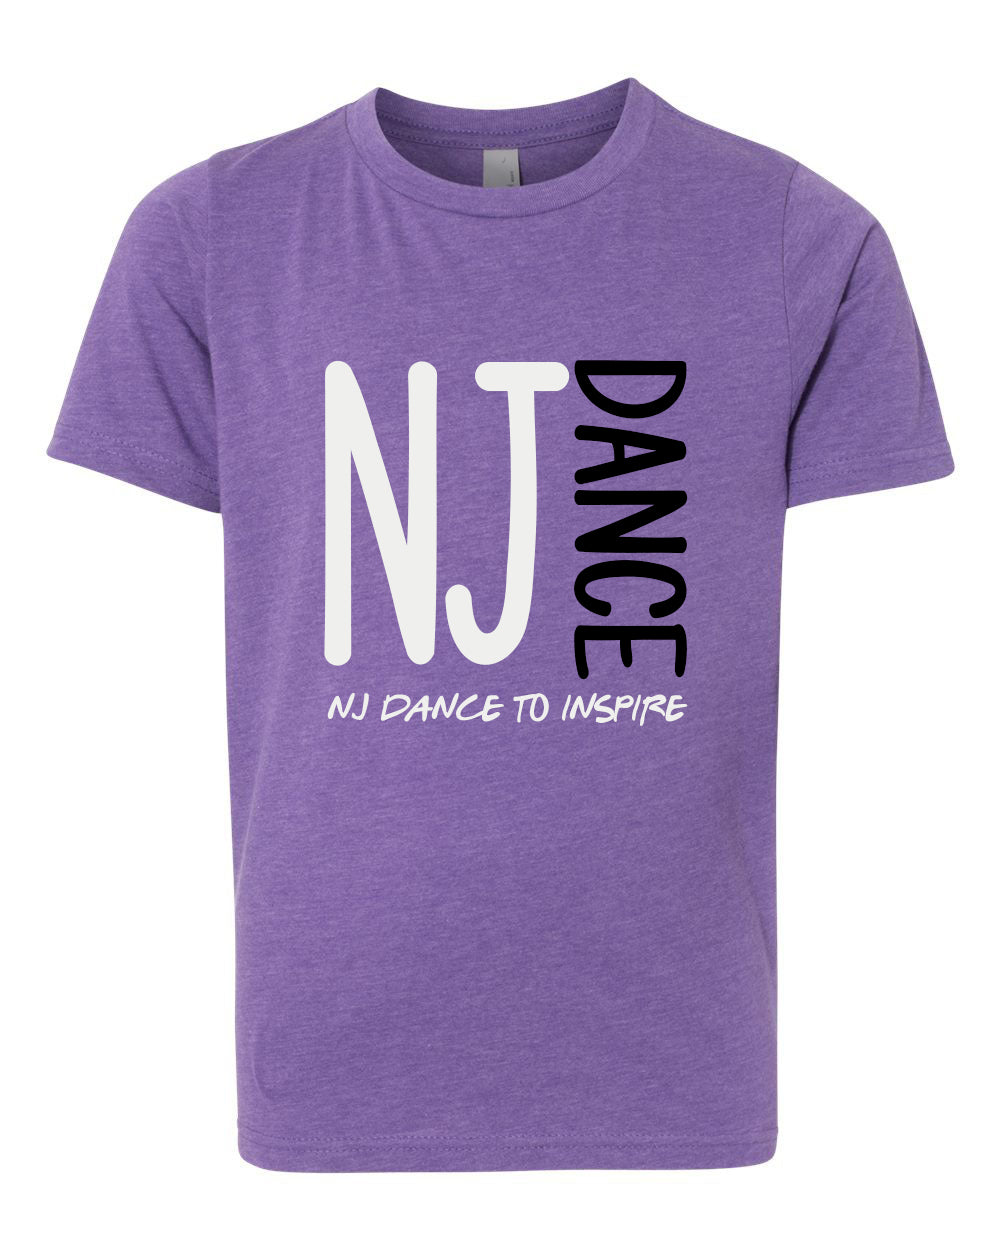 1 NJ Dance to Inspire